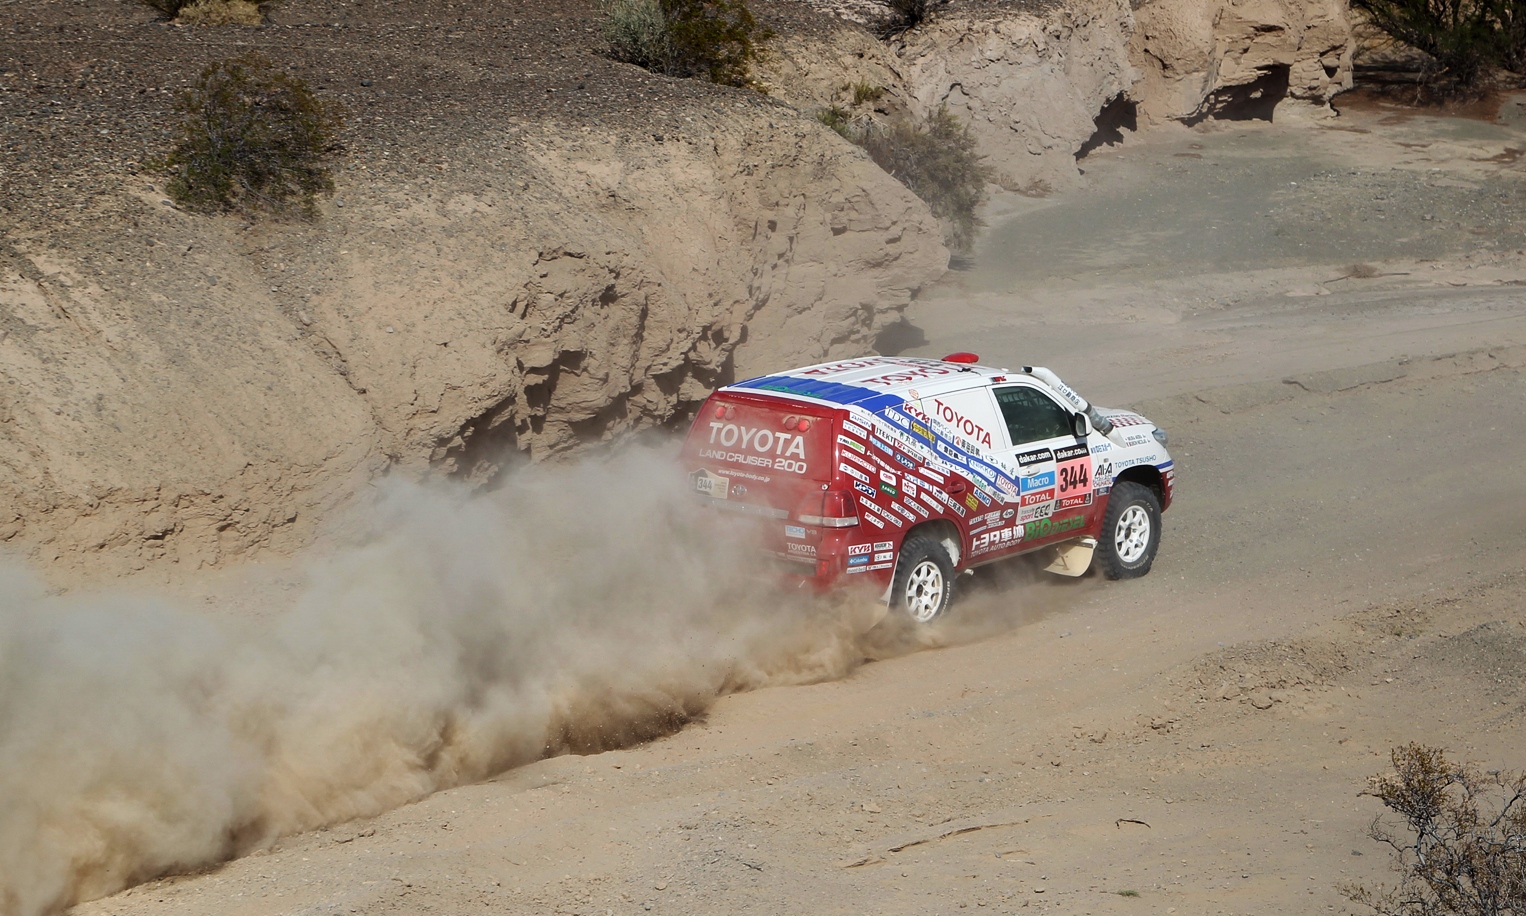 2014 Dakar Rally